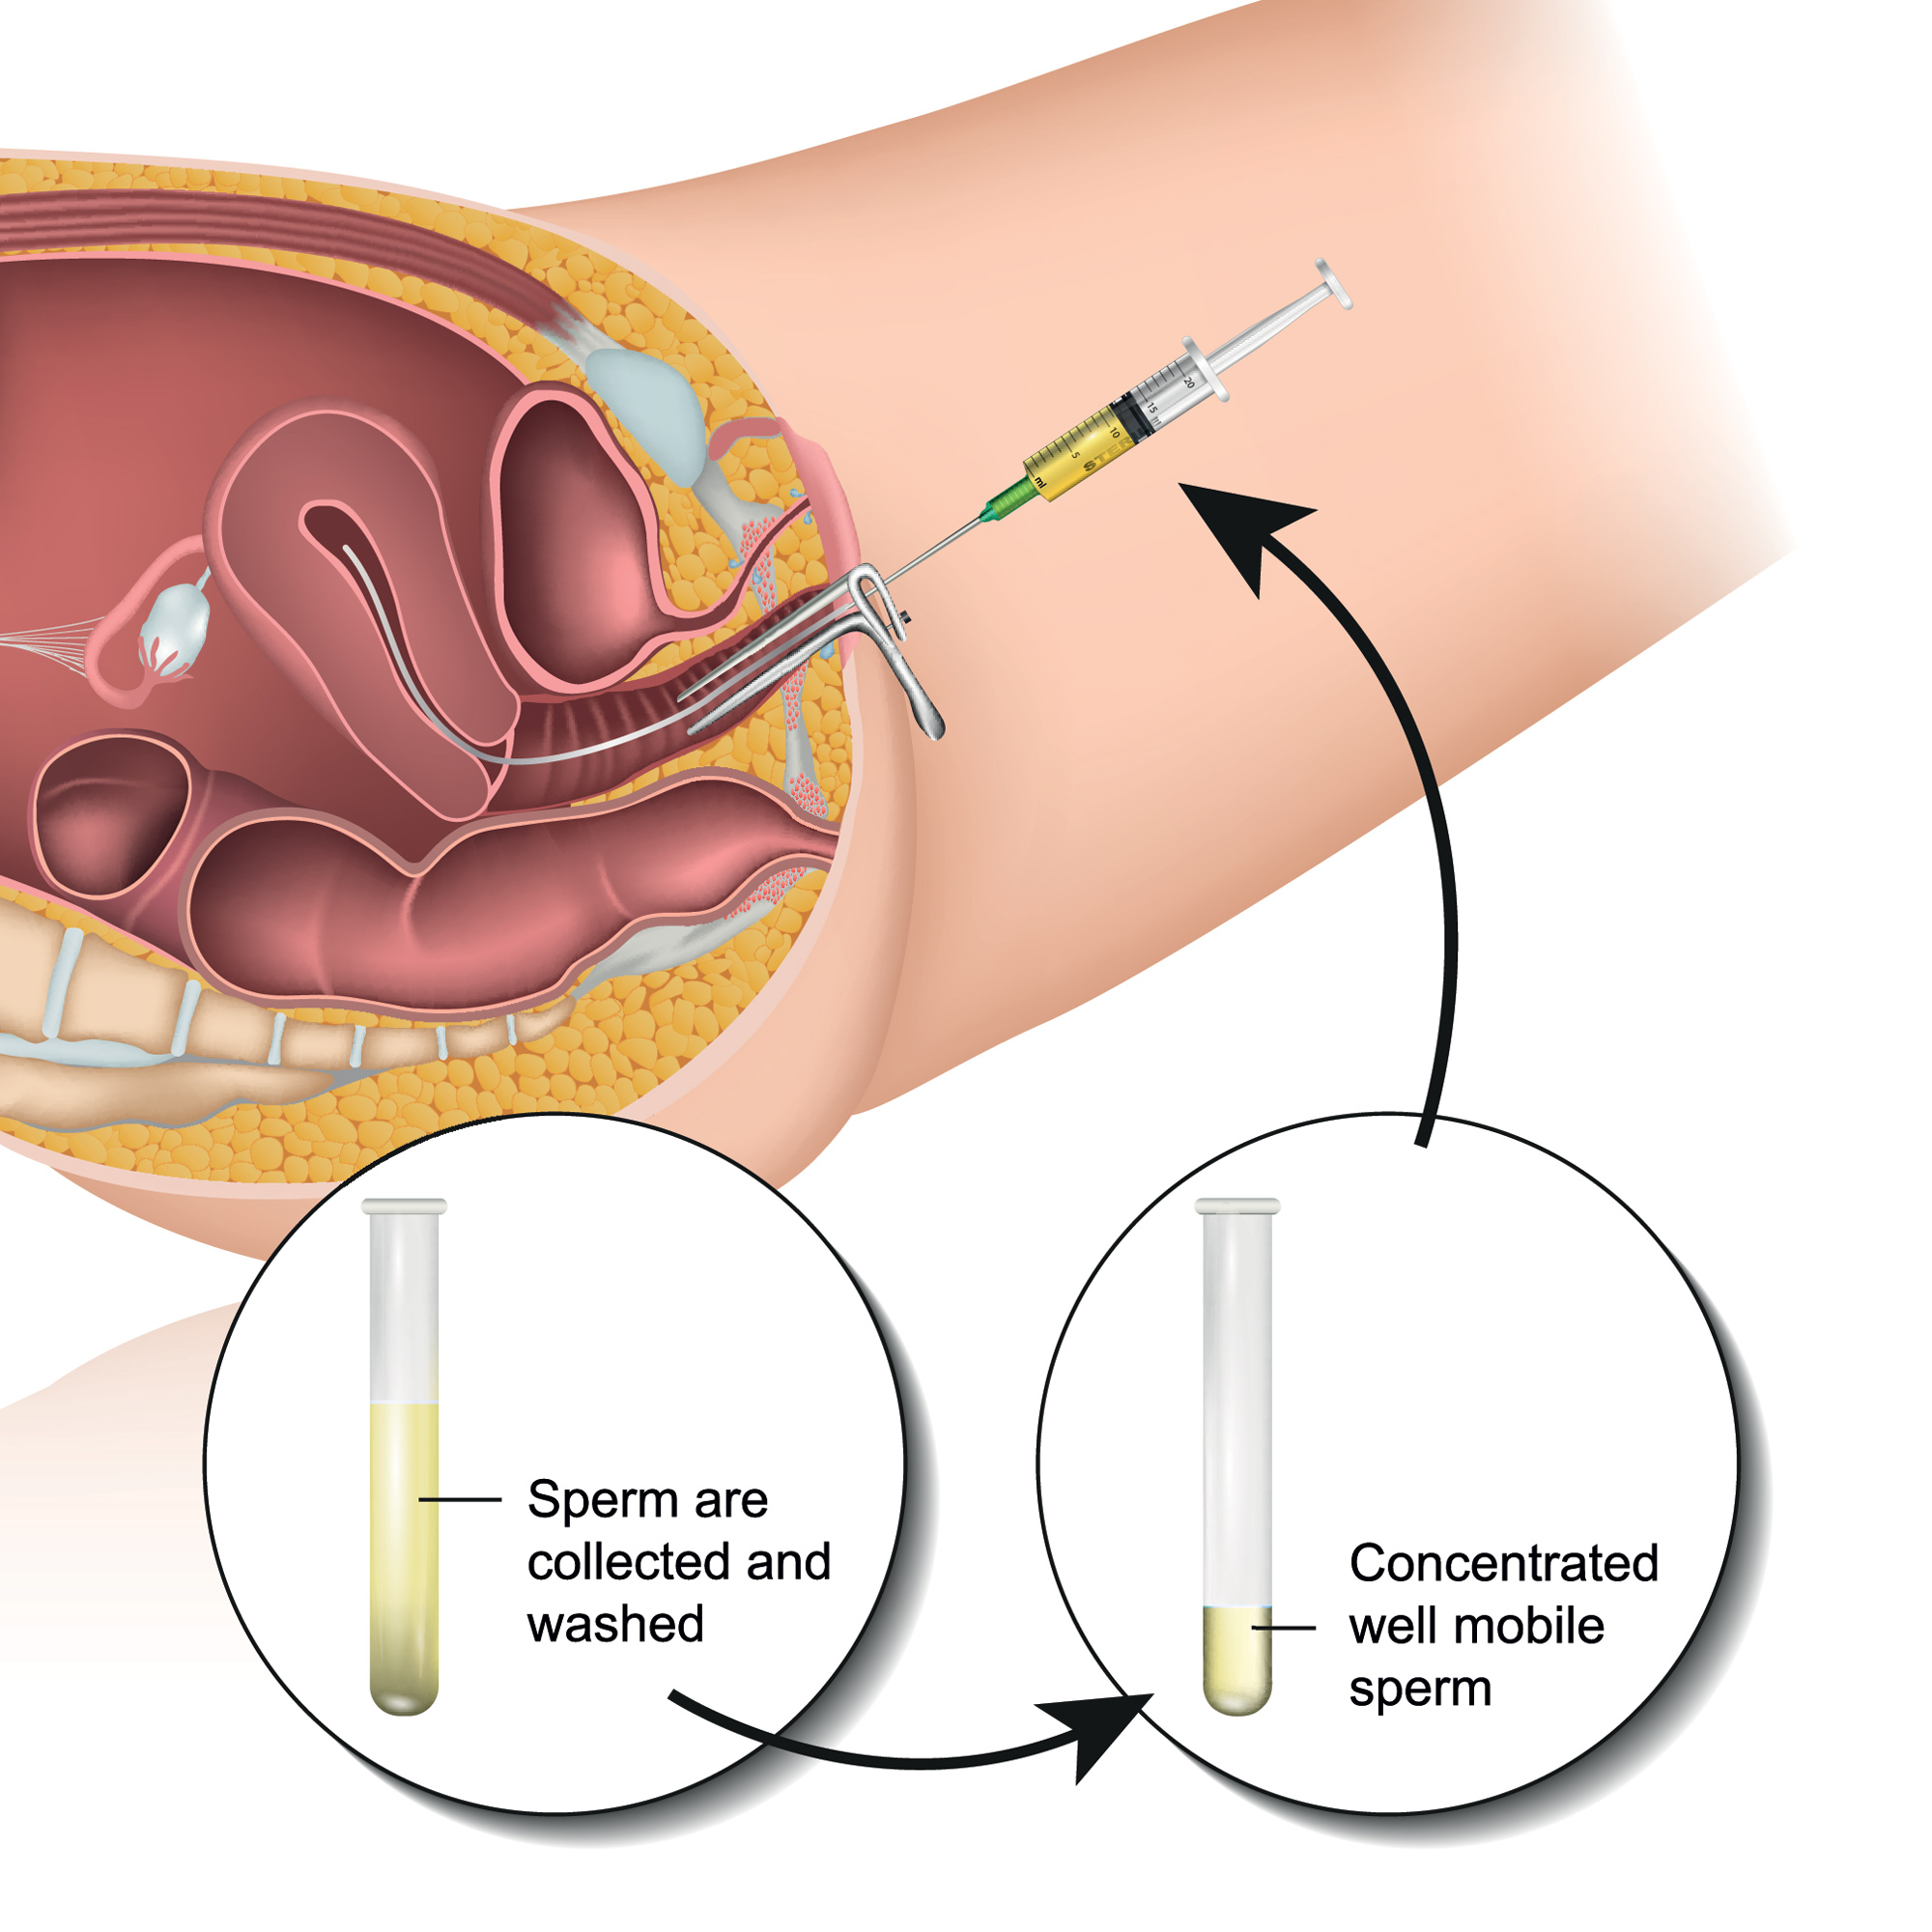 Symptoms of IUI Pregnancy  Signs of Intra Uterine Insemination